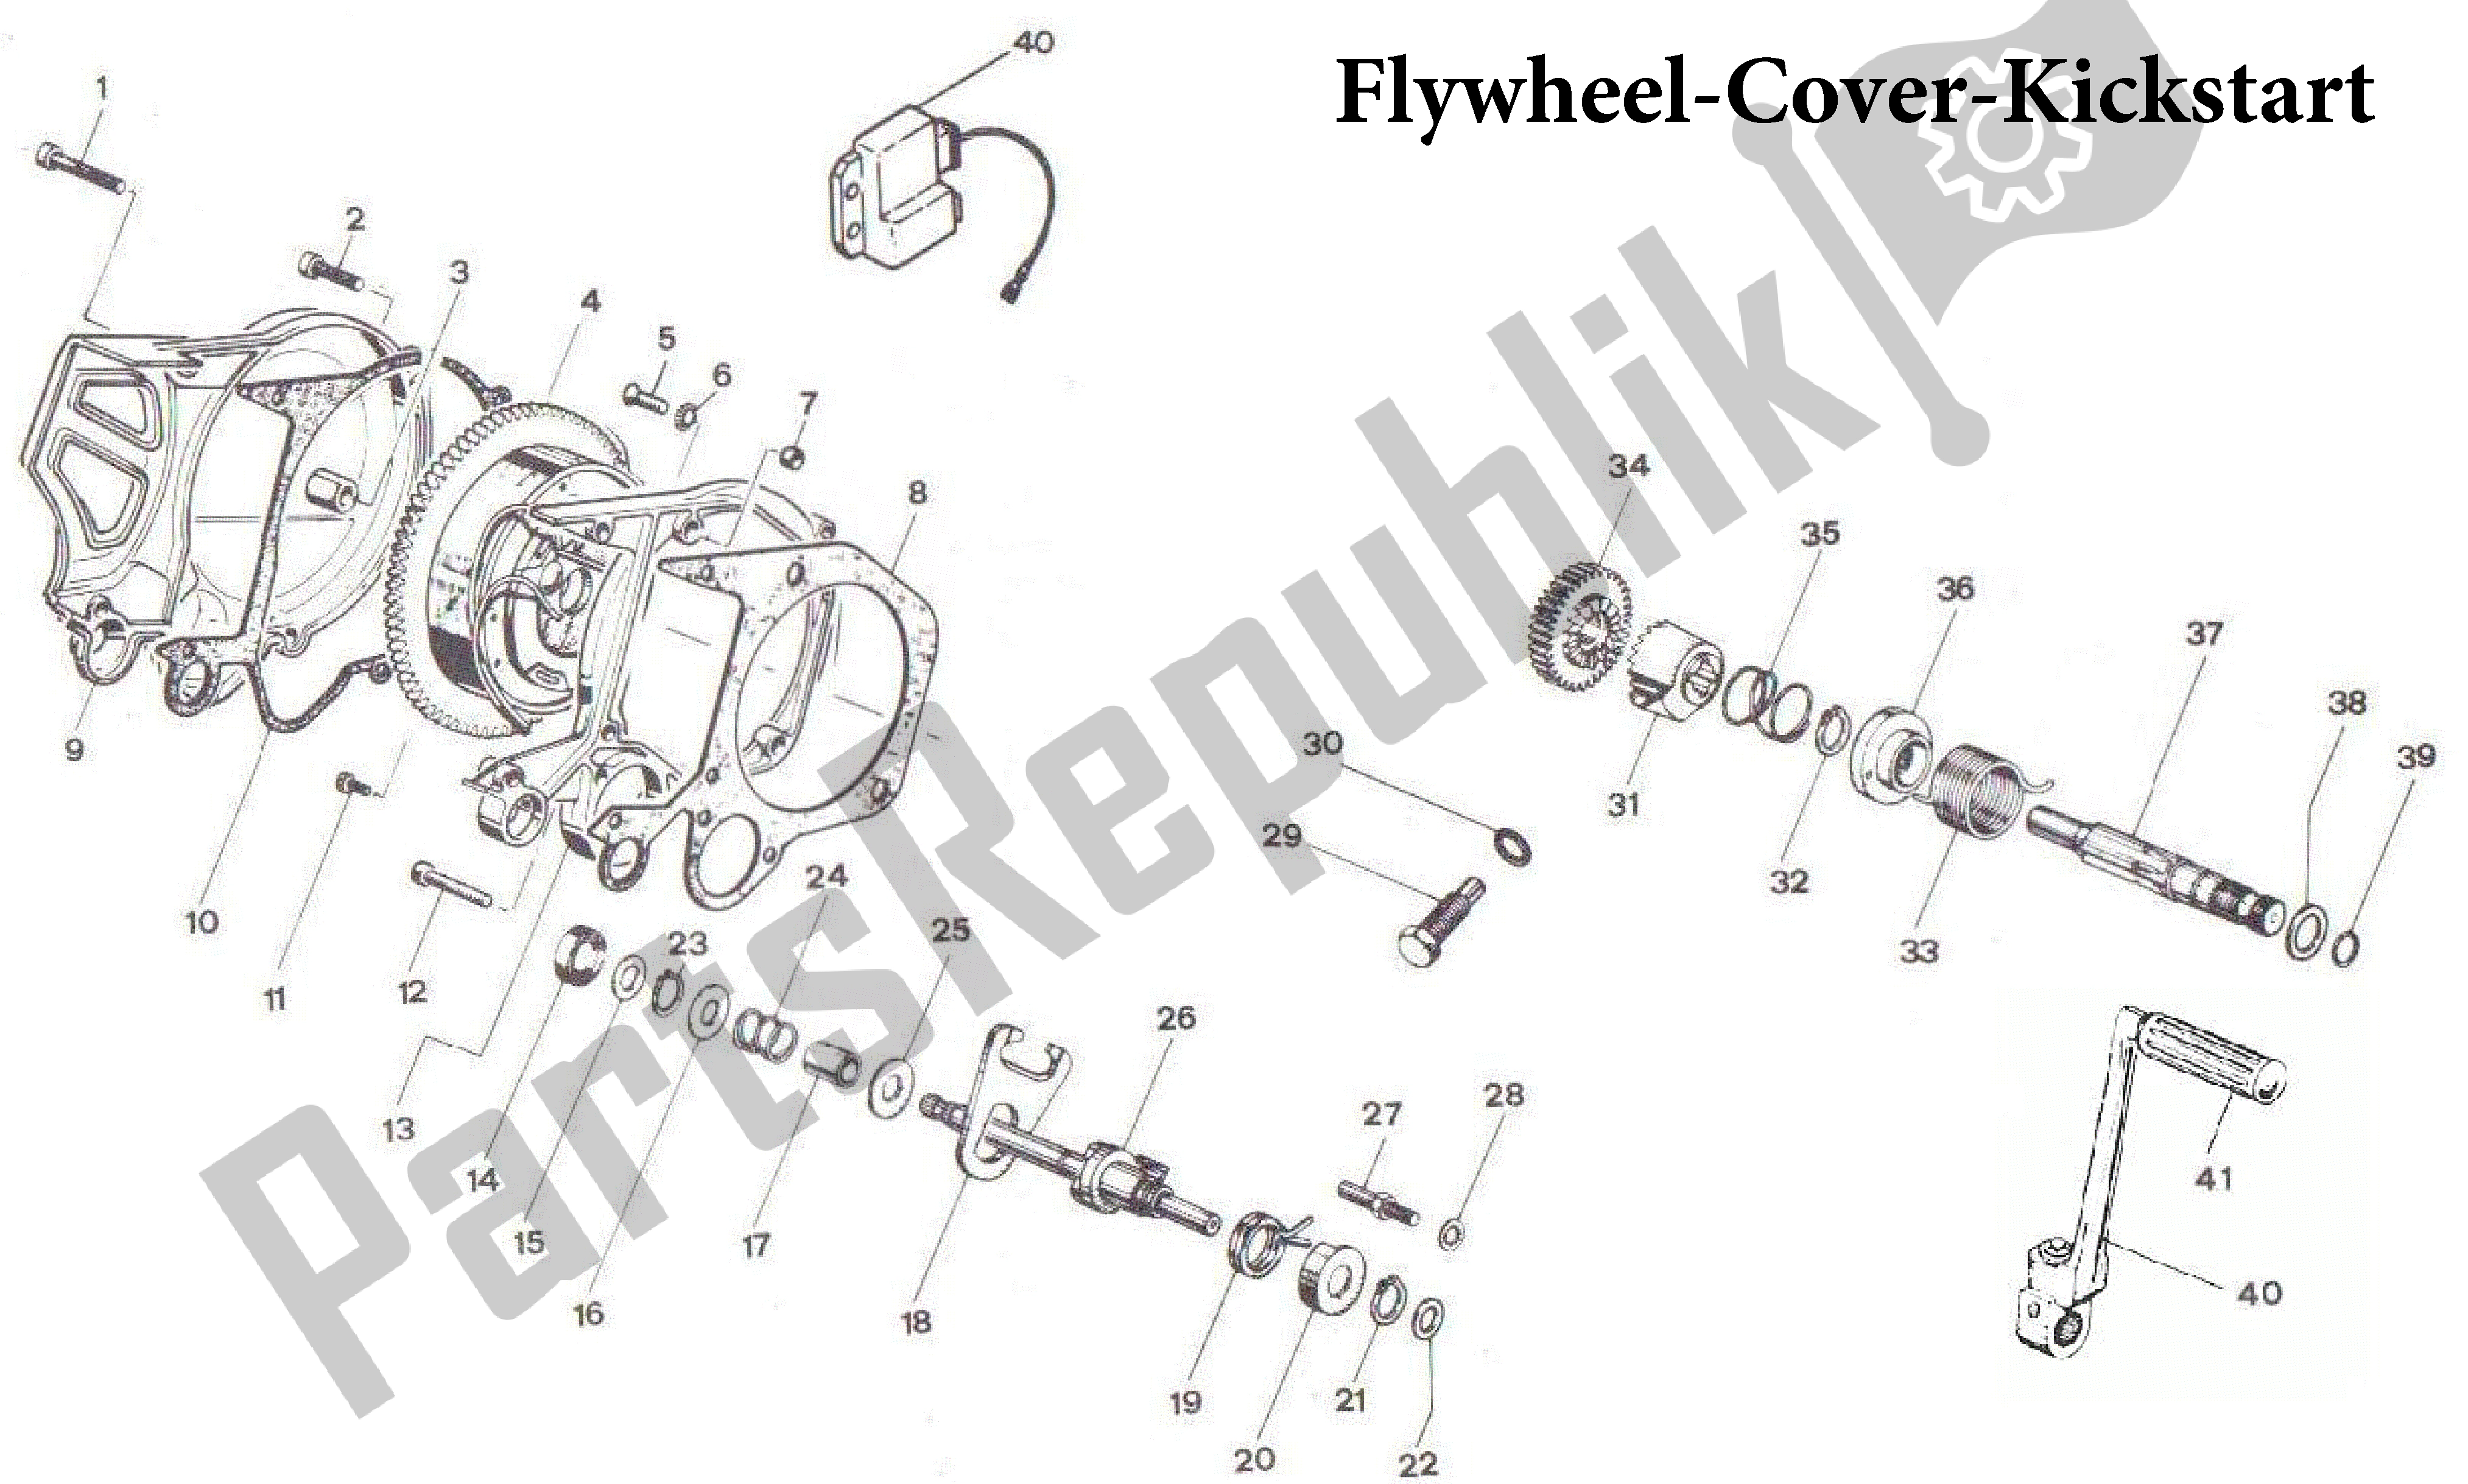 All parts for the Flywheel-cover-kickstart of the Aprilia Tuareg 50 1990 - 1992